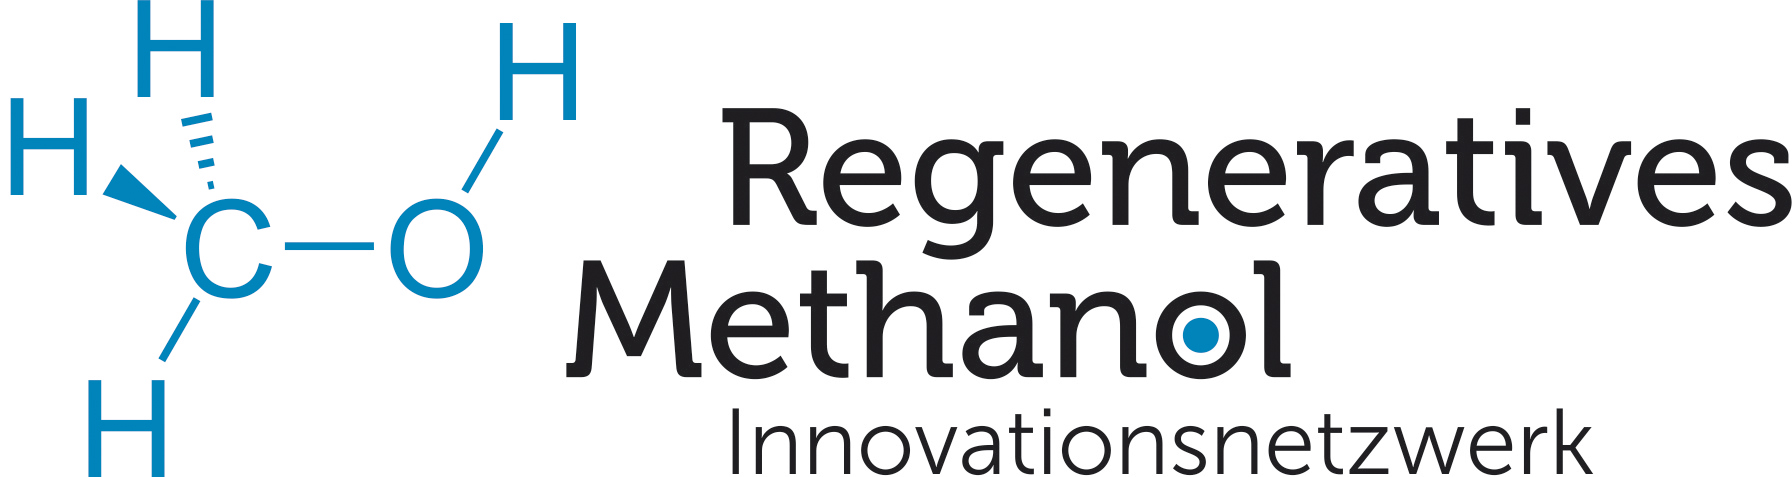 regeneratives methanol netzwerk logo (RGB)